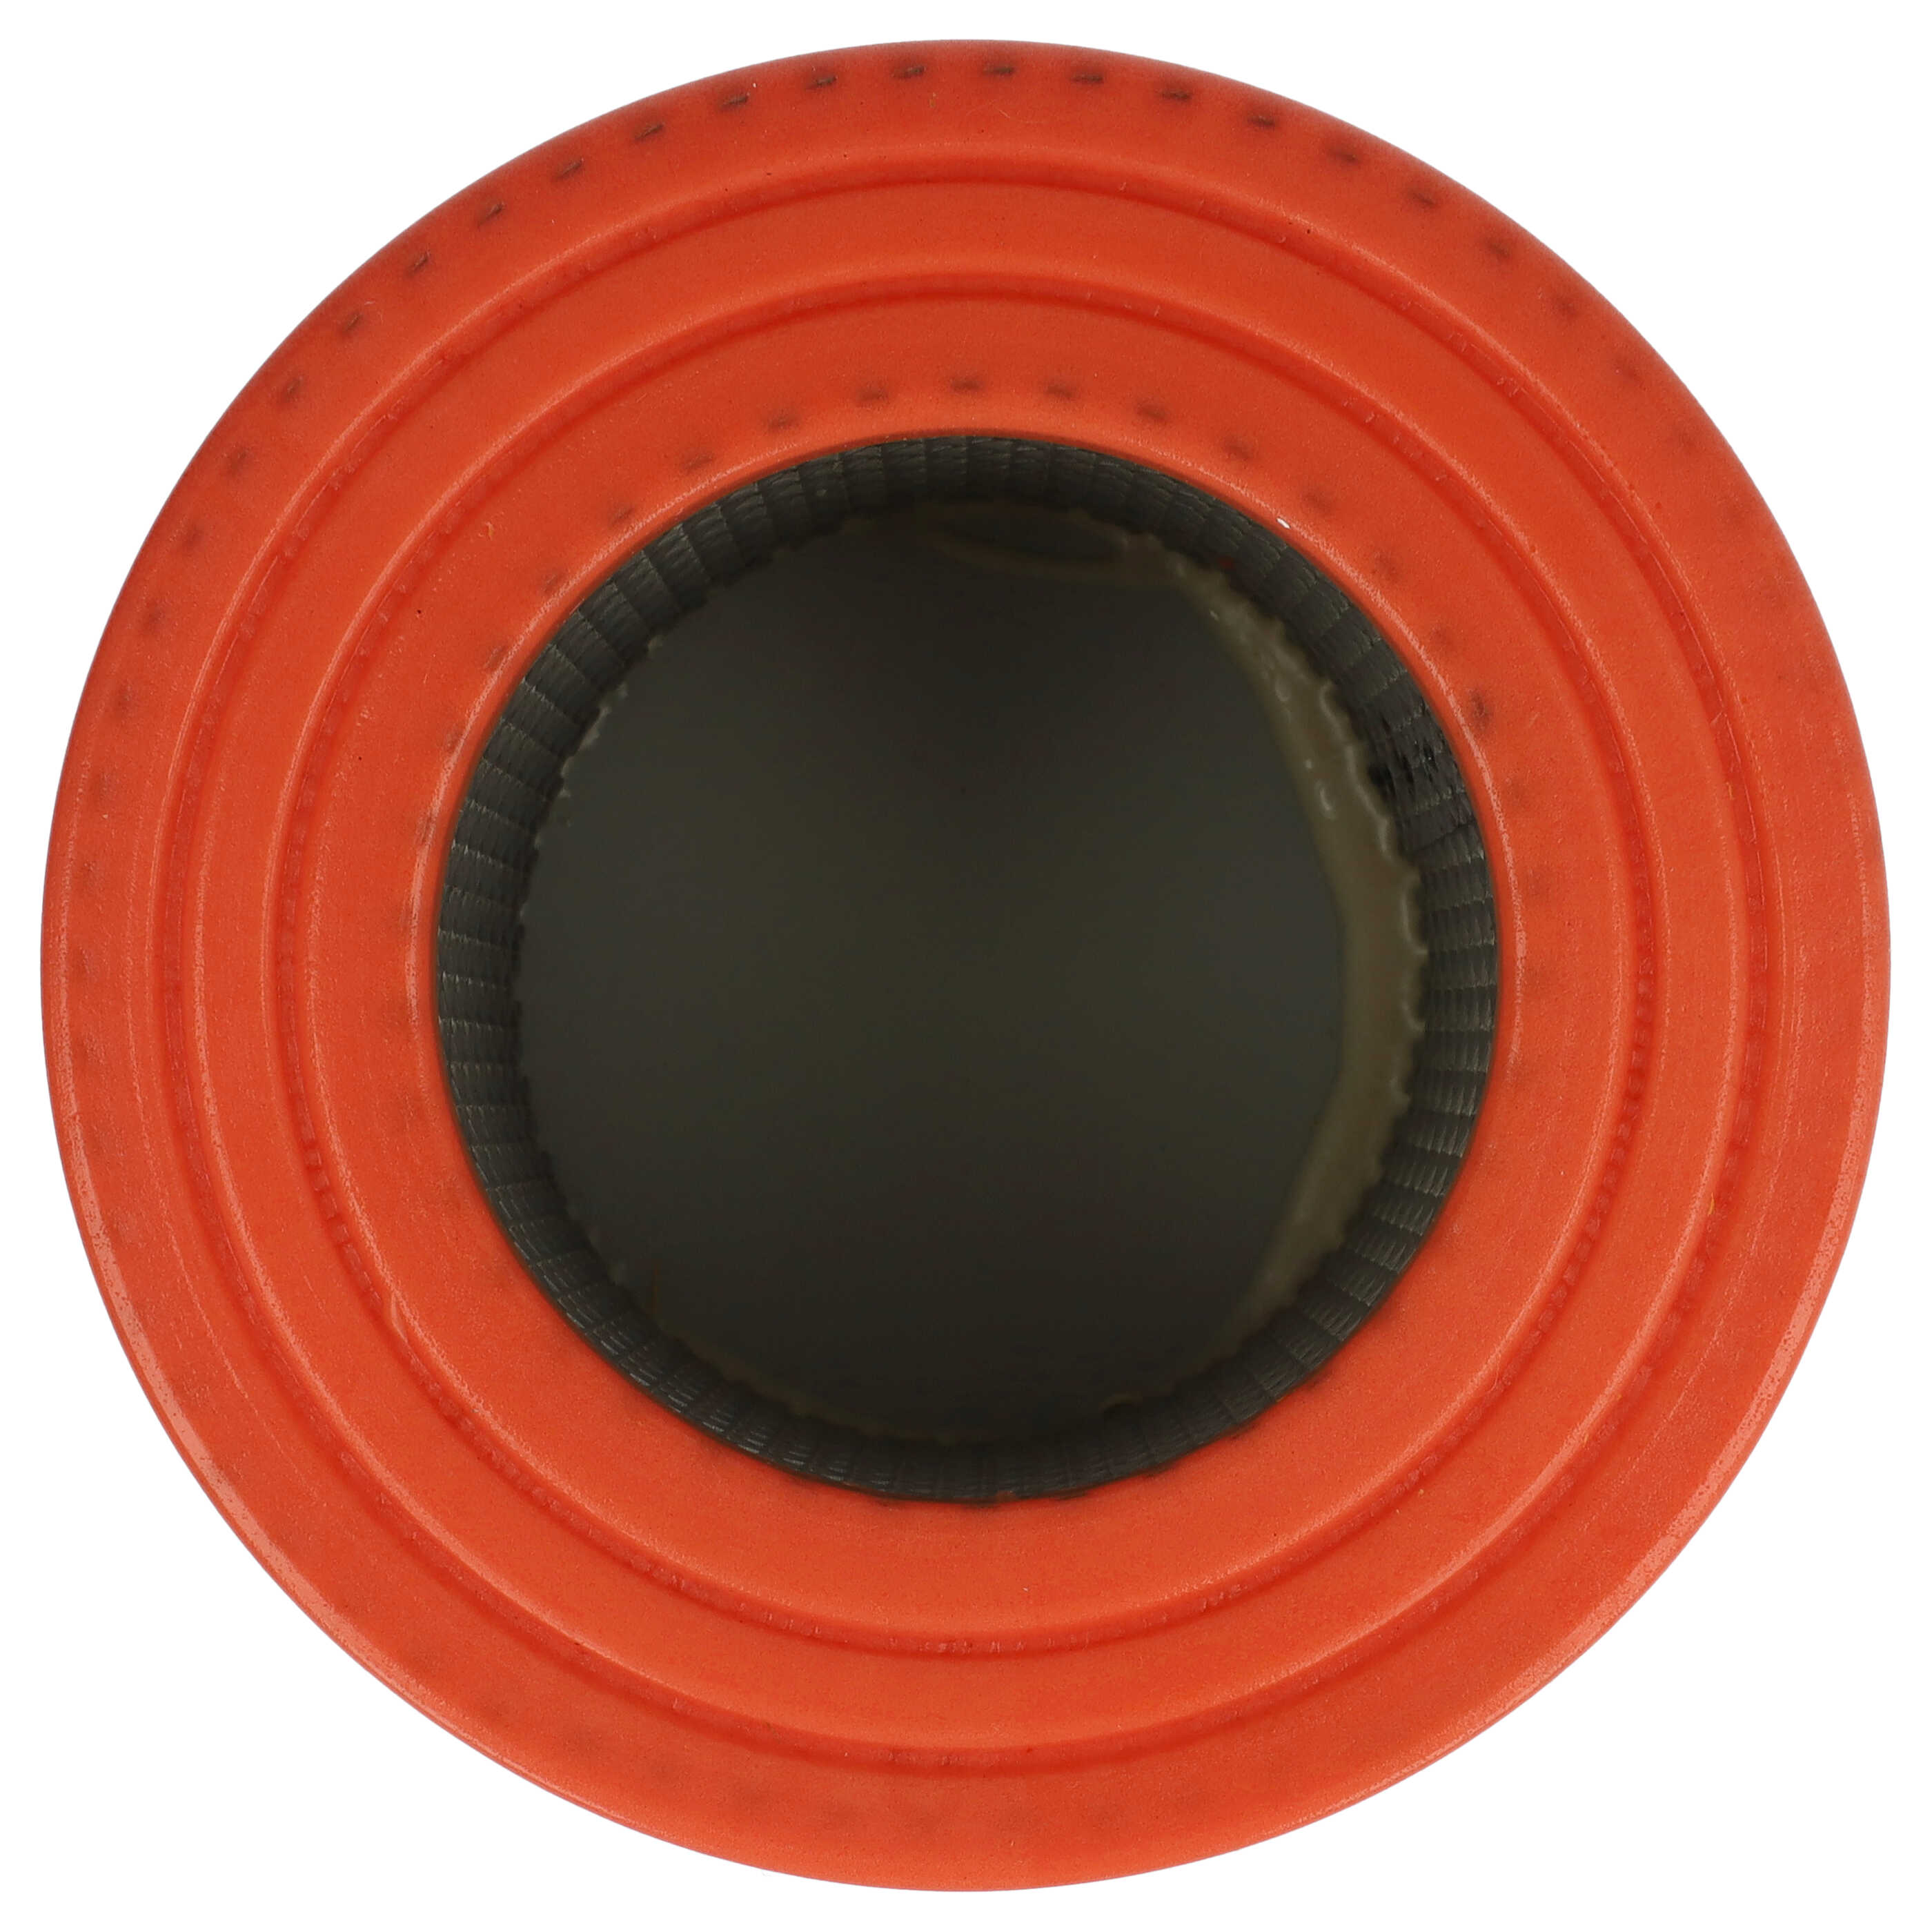 Filtro reemplaza Güde 16731 para aspiradora chimeneas filtro de cartucho, negro / naranja / blanco / gris